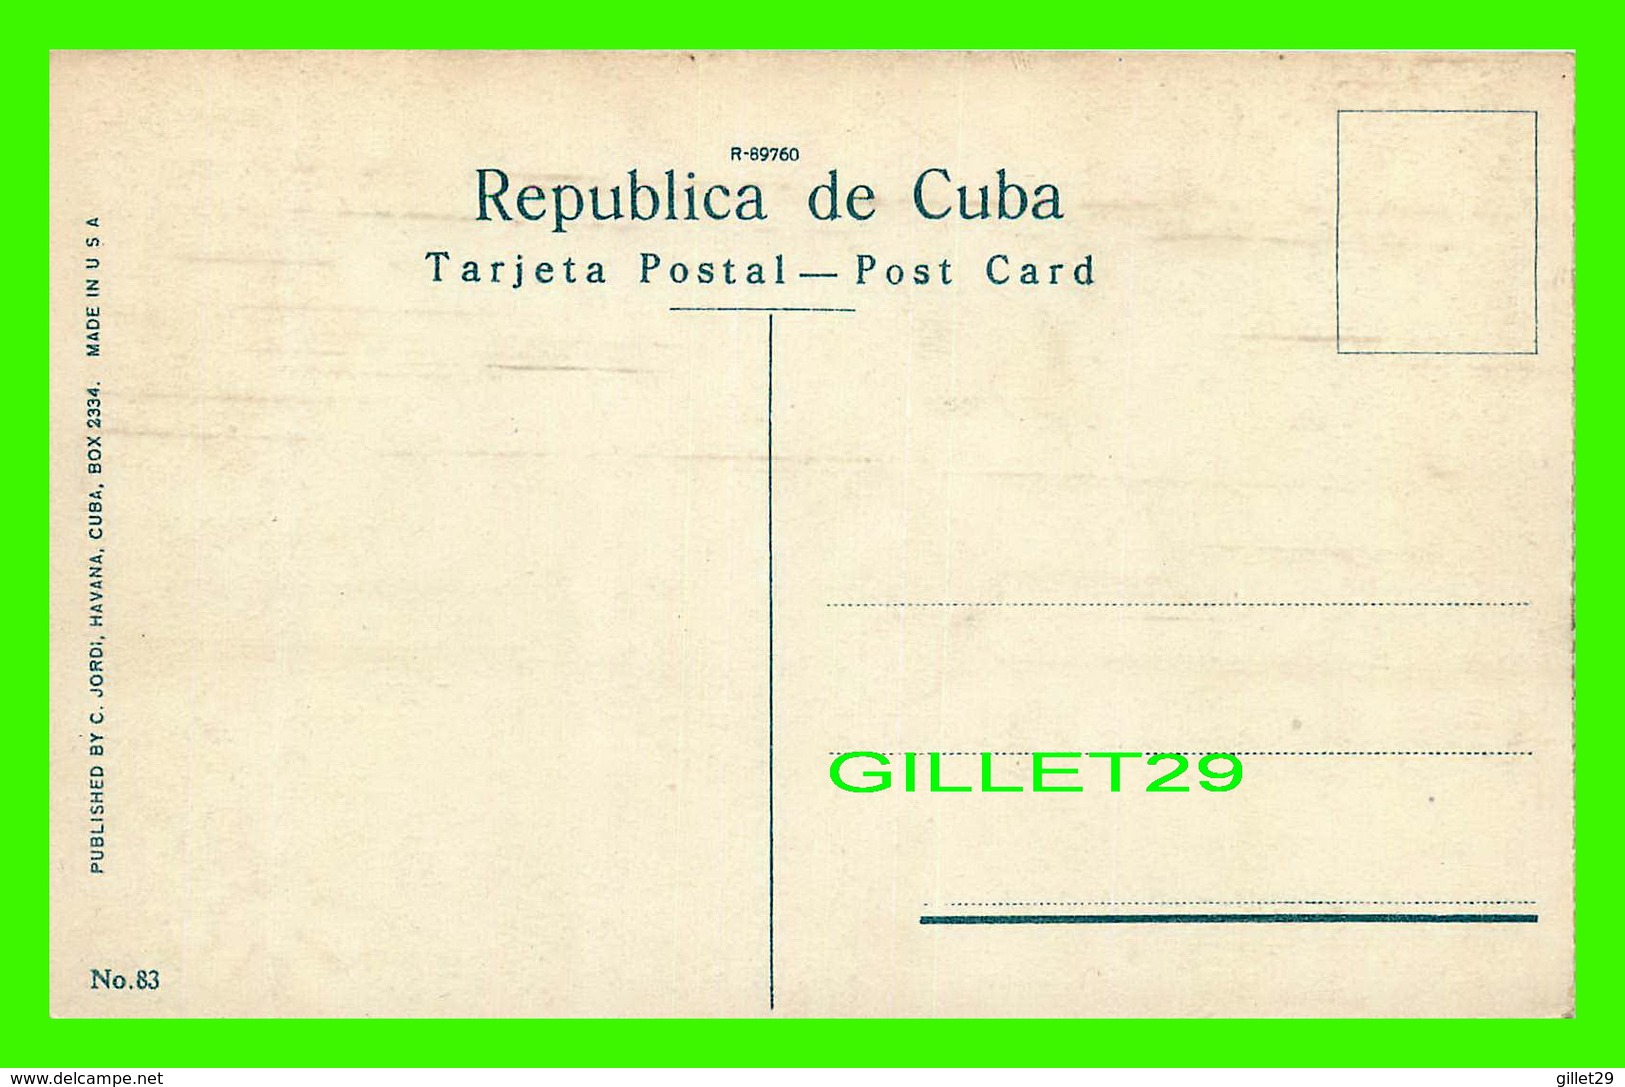 HABANA, CUBA - CASINO DE LA PLAYA - THE CASINO, MARIAMAO BEACH -  PUB. BY C. JORDI - - Cuba